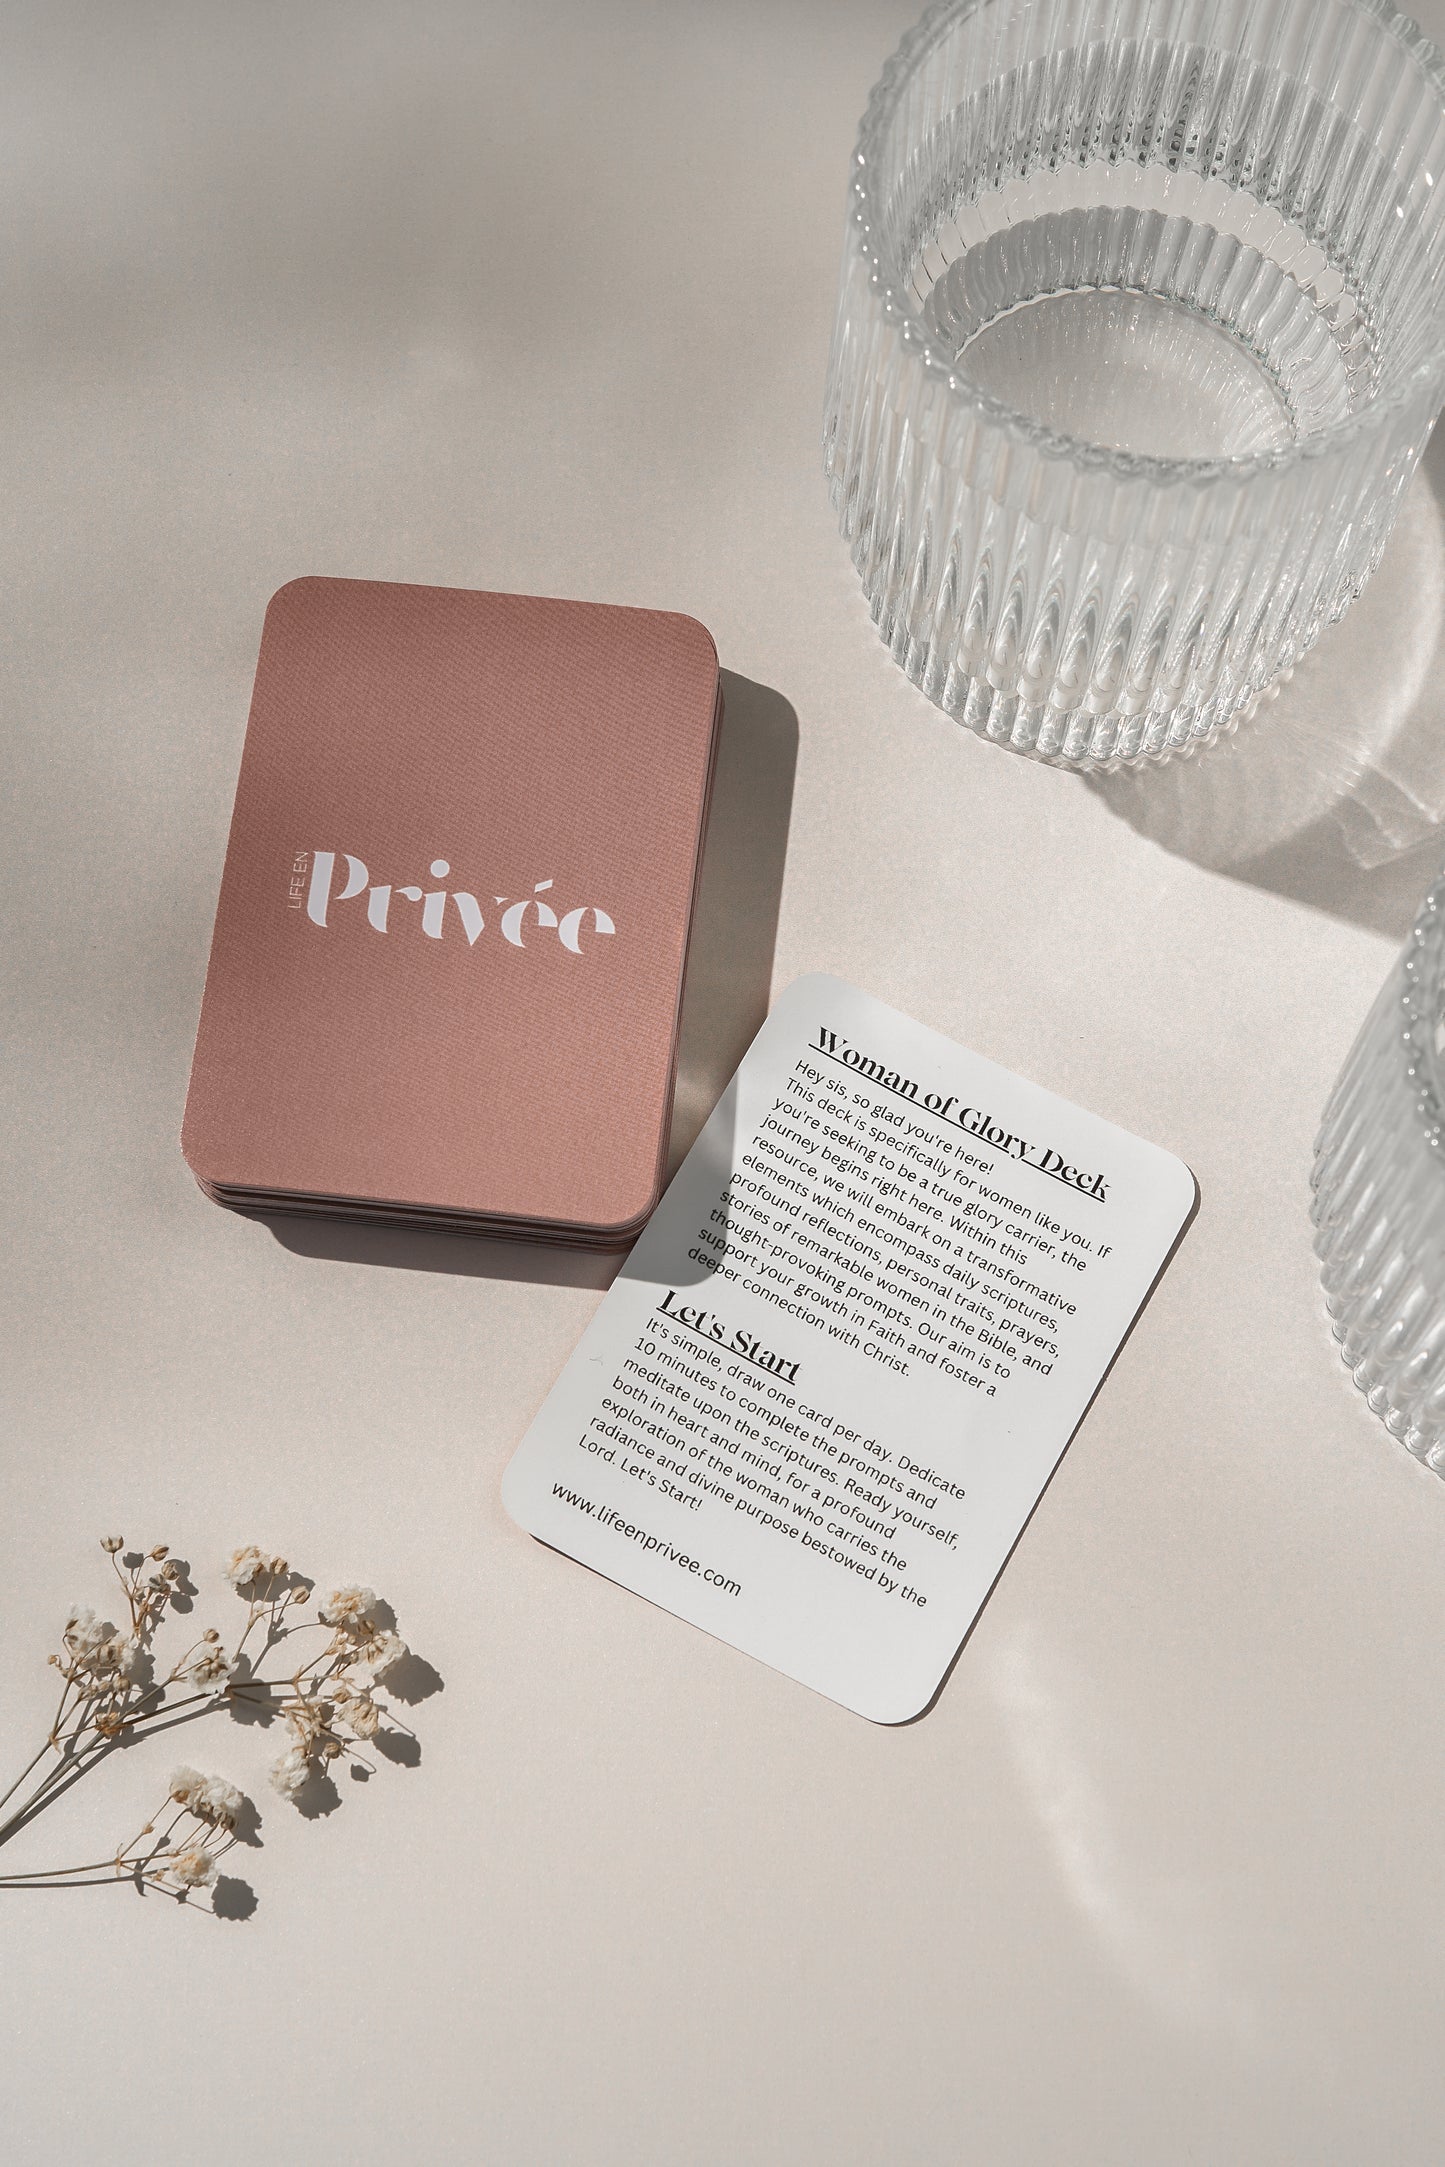 The Devotional Deck Bundle - Most Loved Privée Products